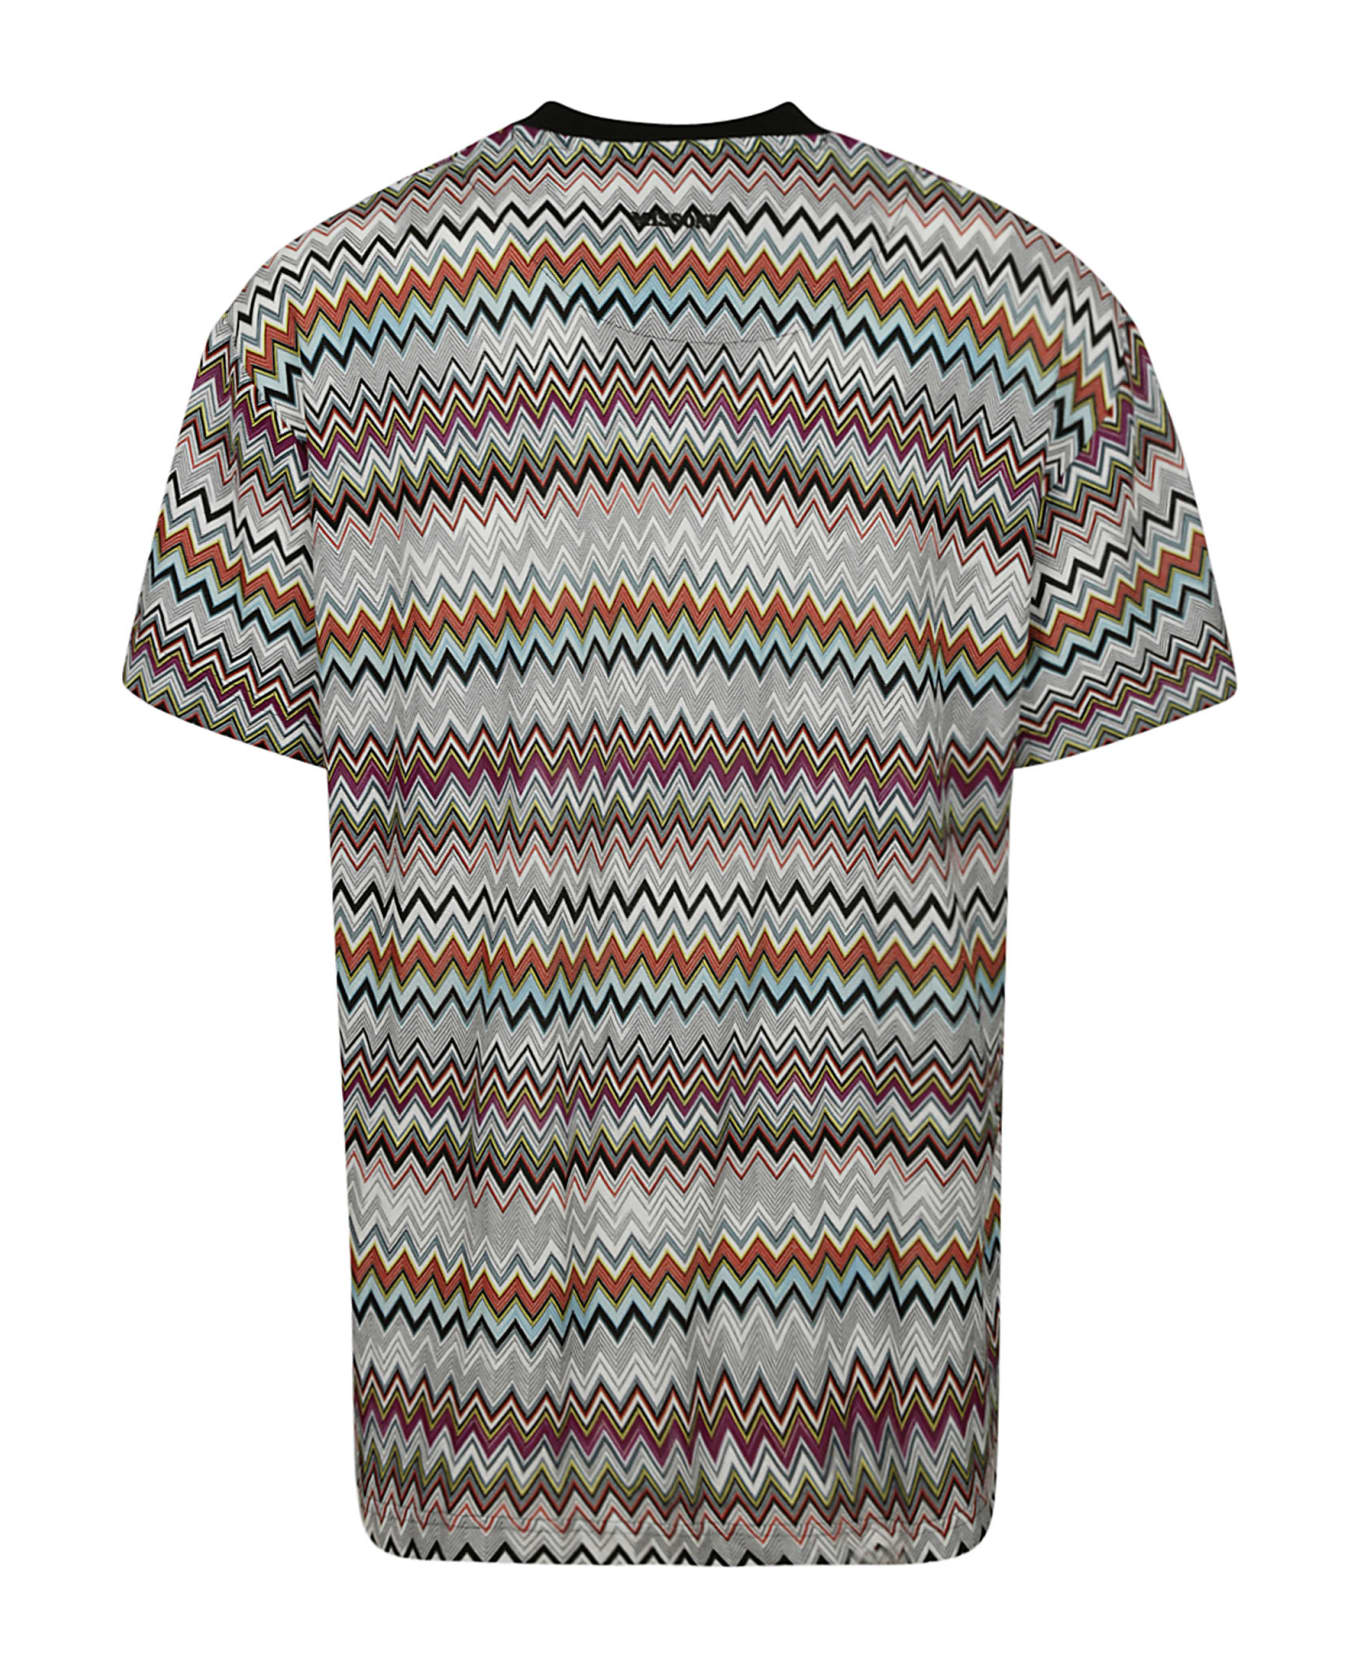 Missoni Short Sleeve T-shirt - N Var.multicolor